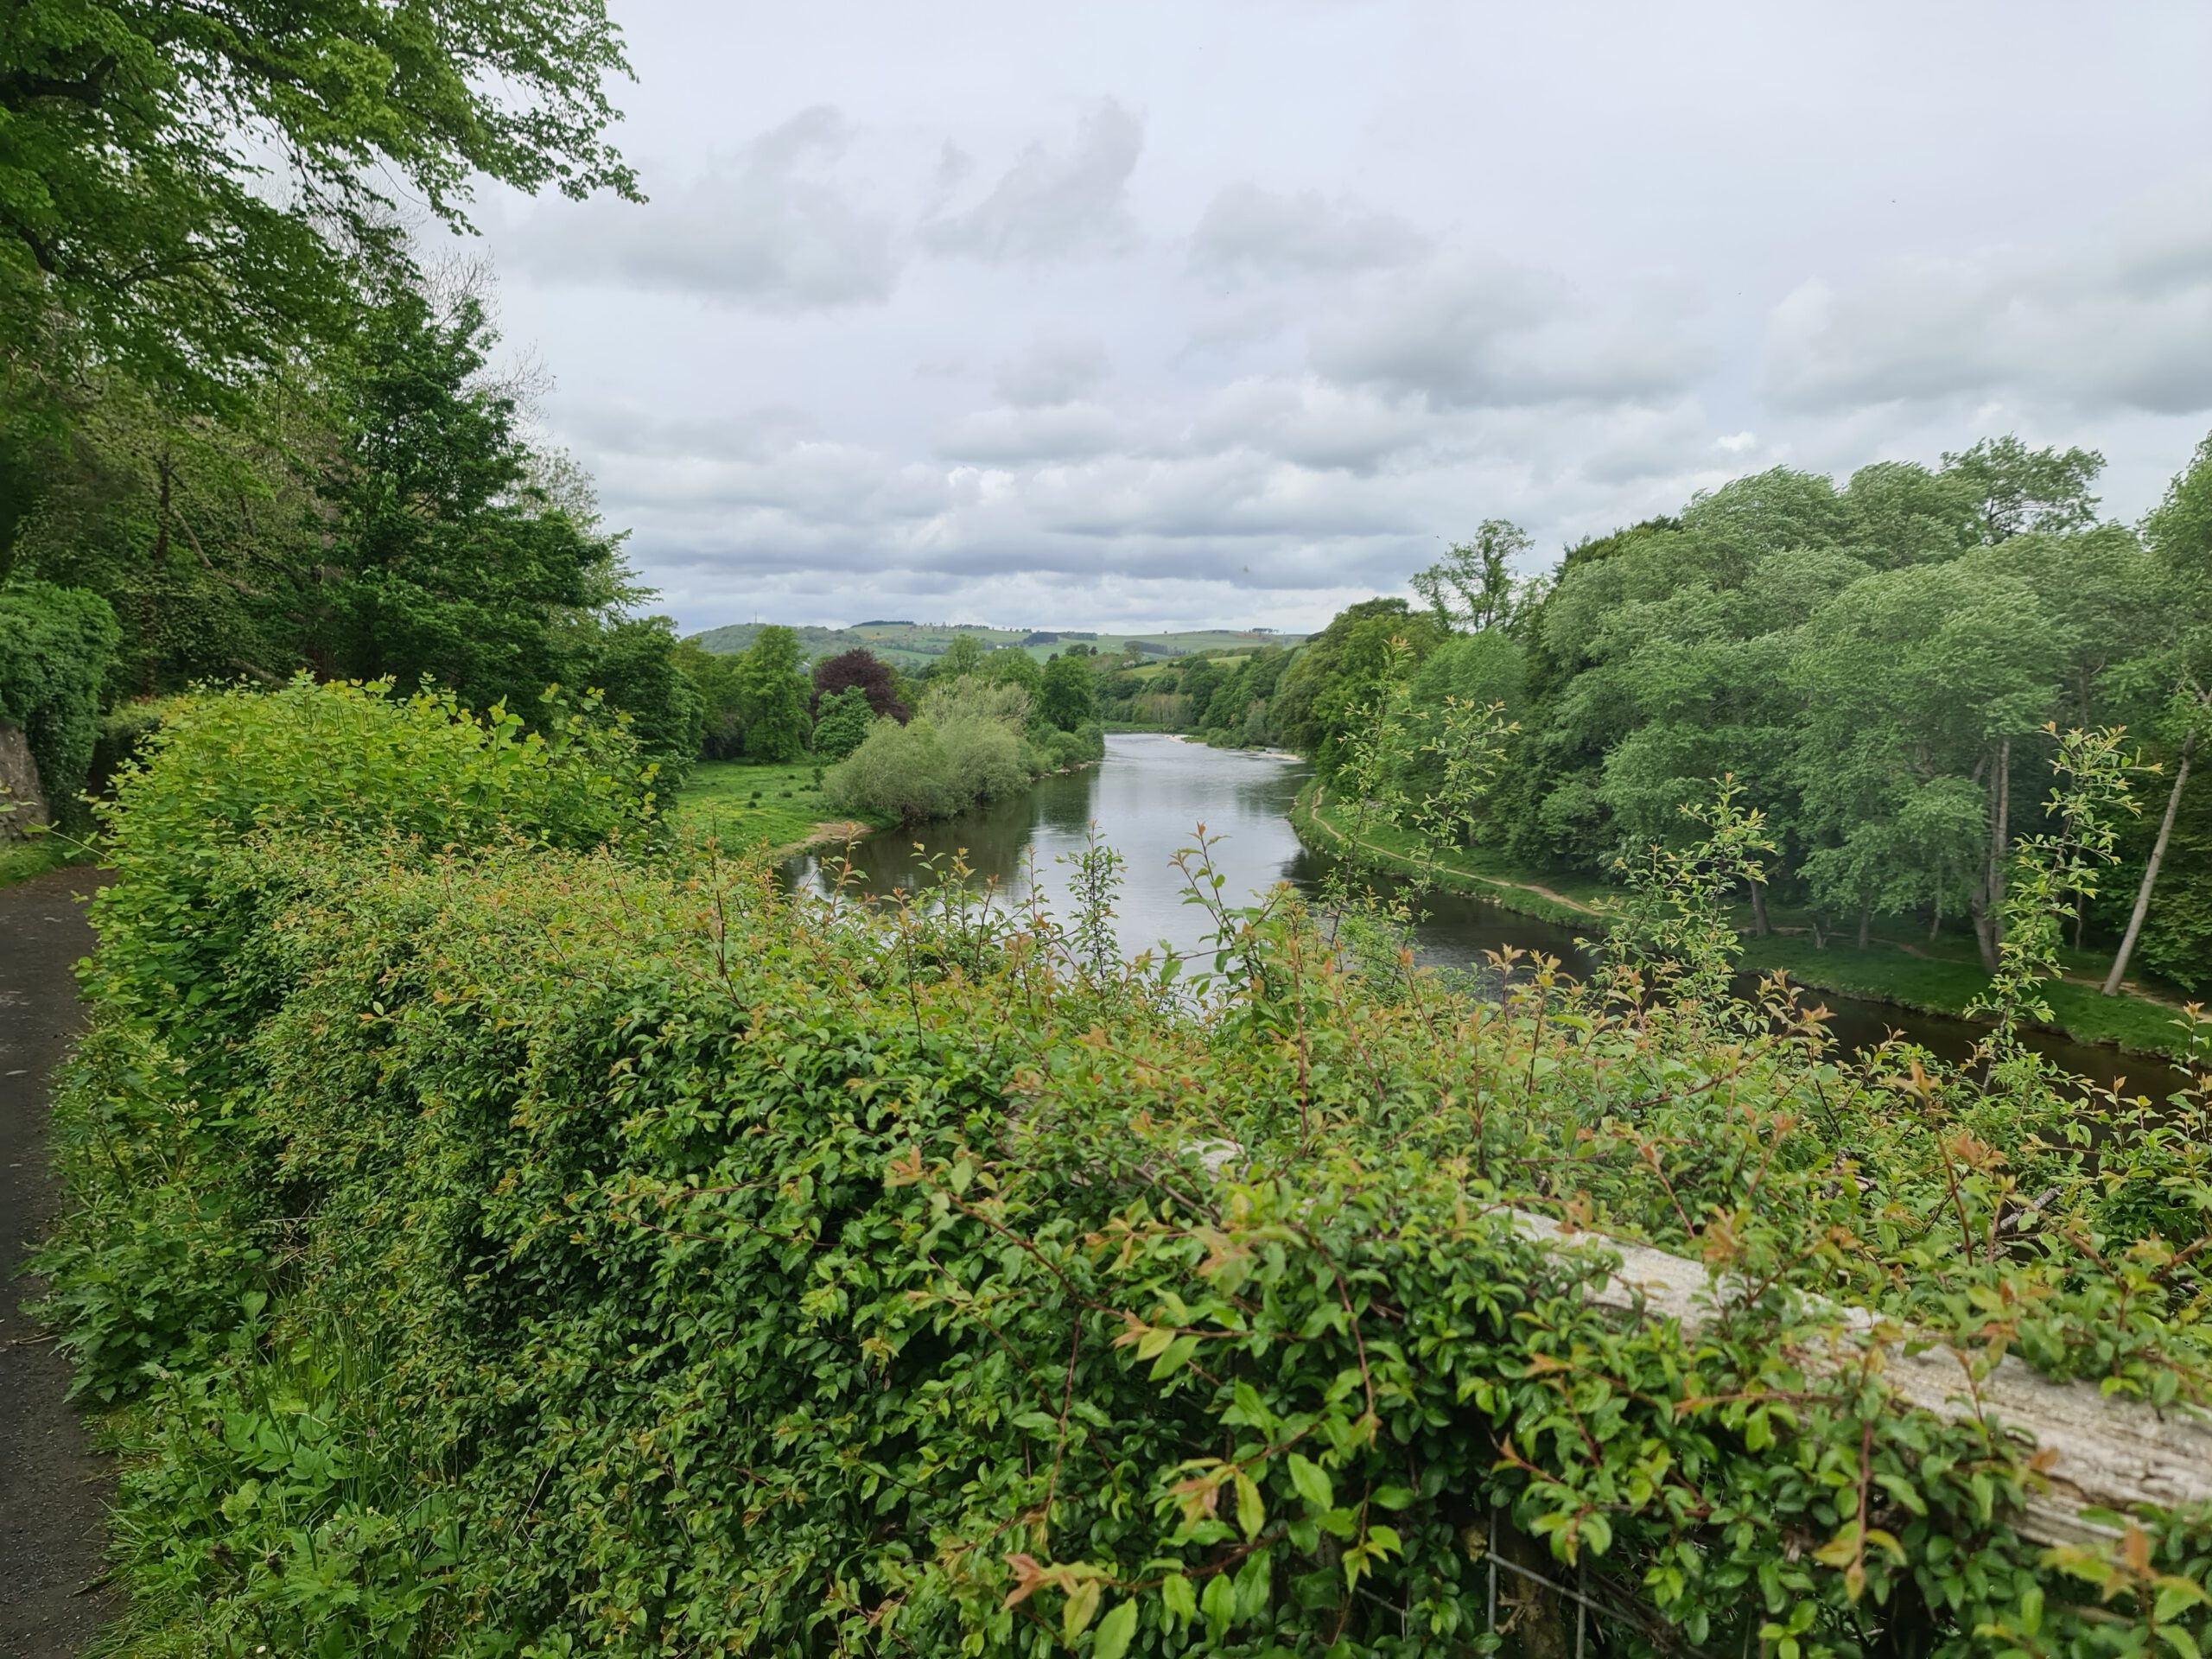 Cauldshiels Loch and the River Tweed, Melrose